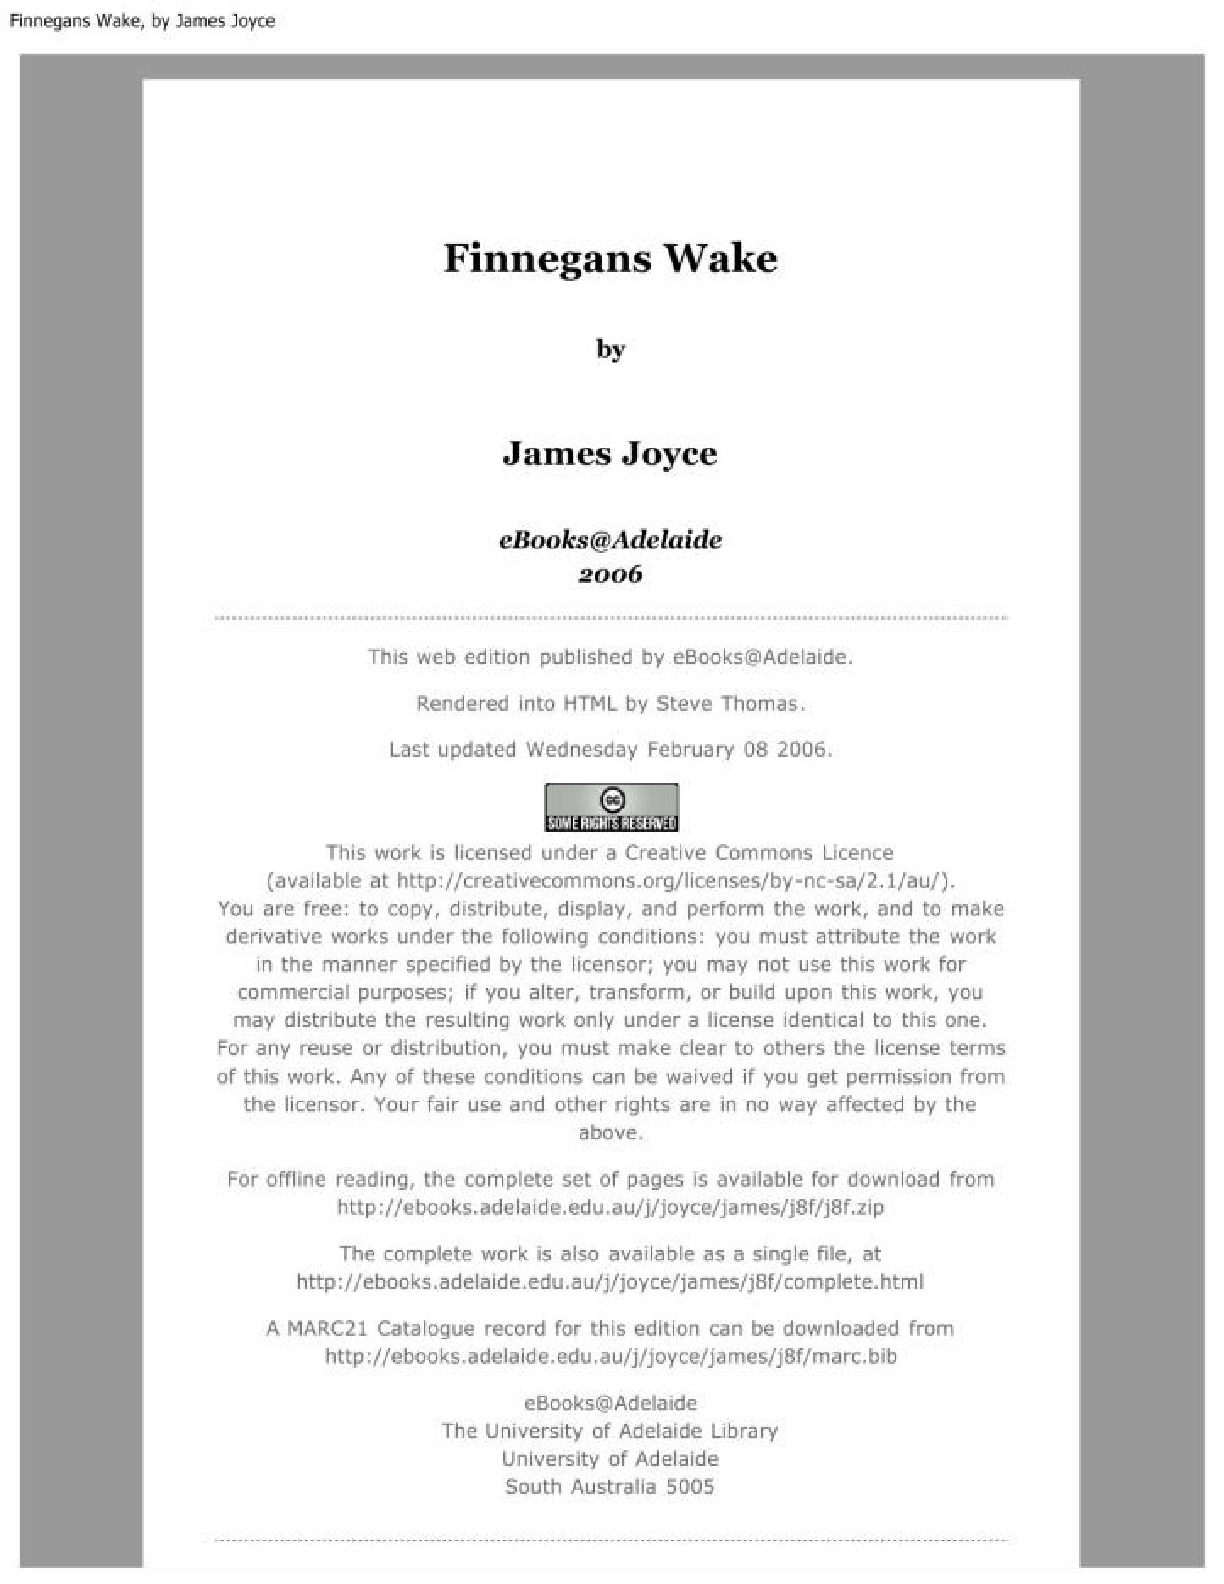 Finnegans Wake – James Joyce